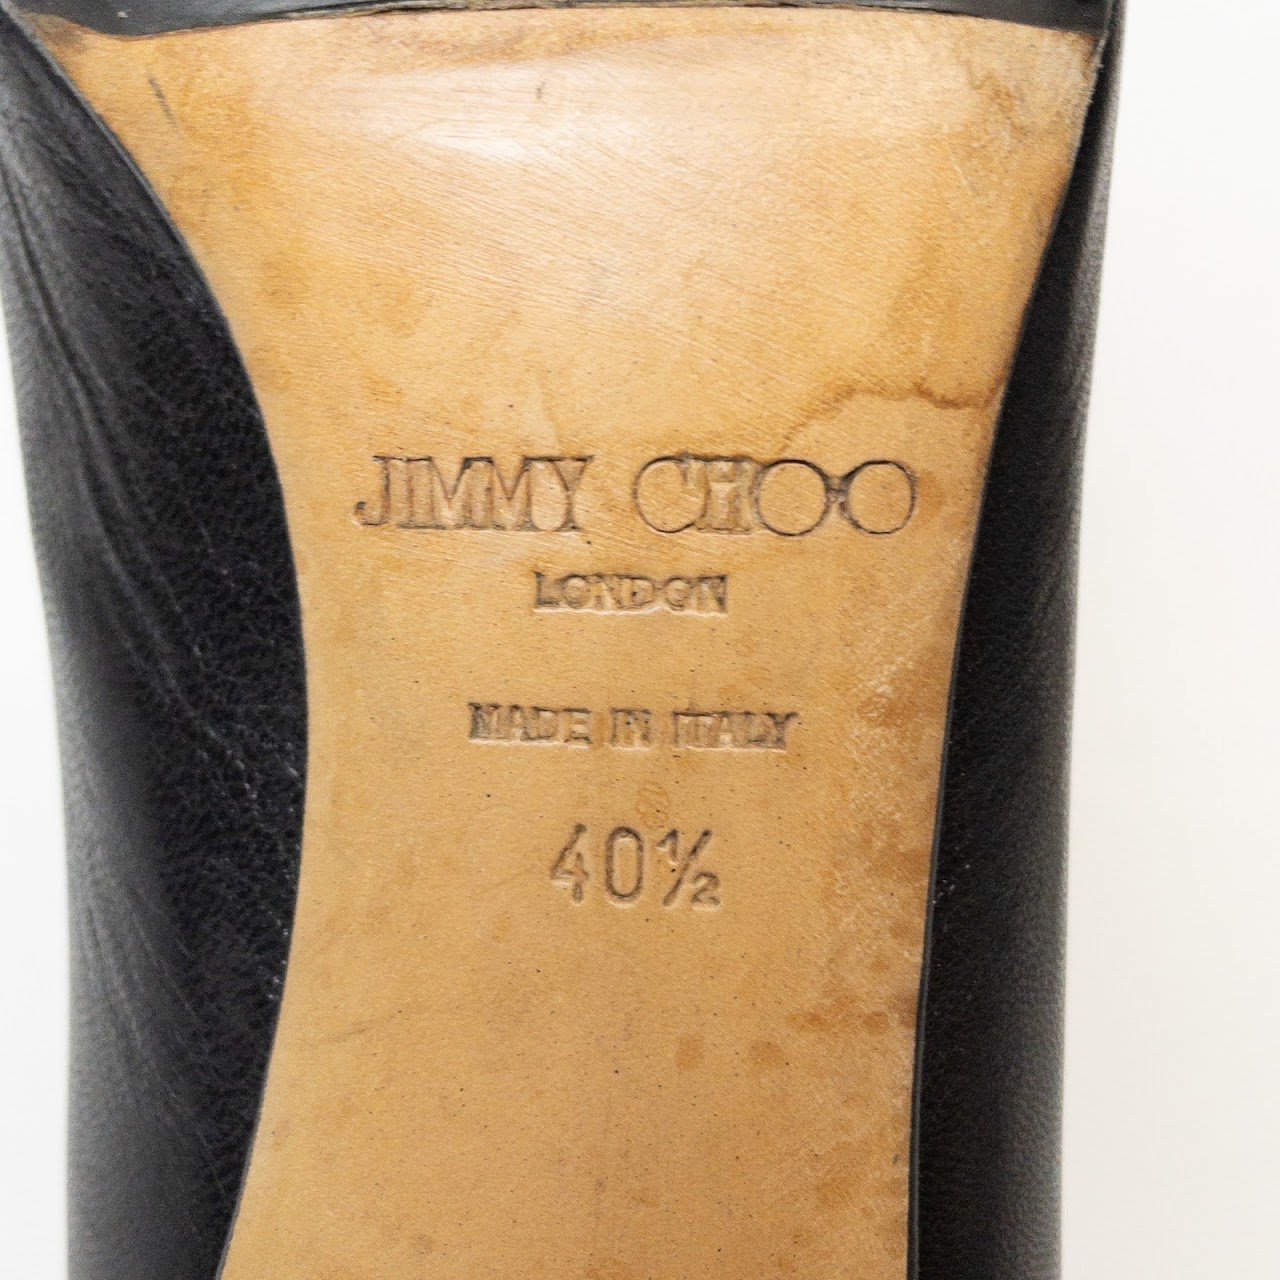 Jimmy Choo Black Leather Pumps